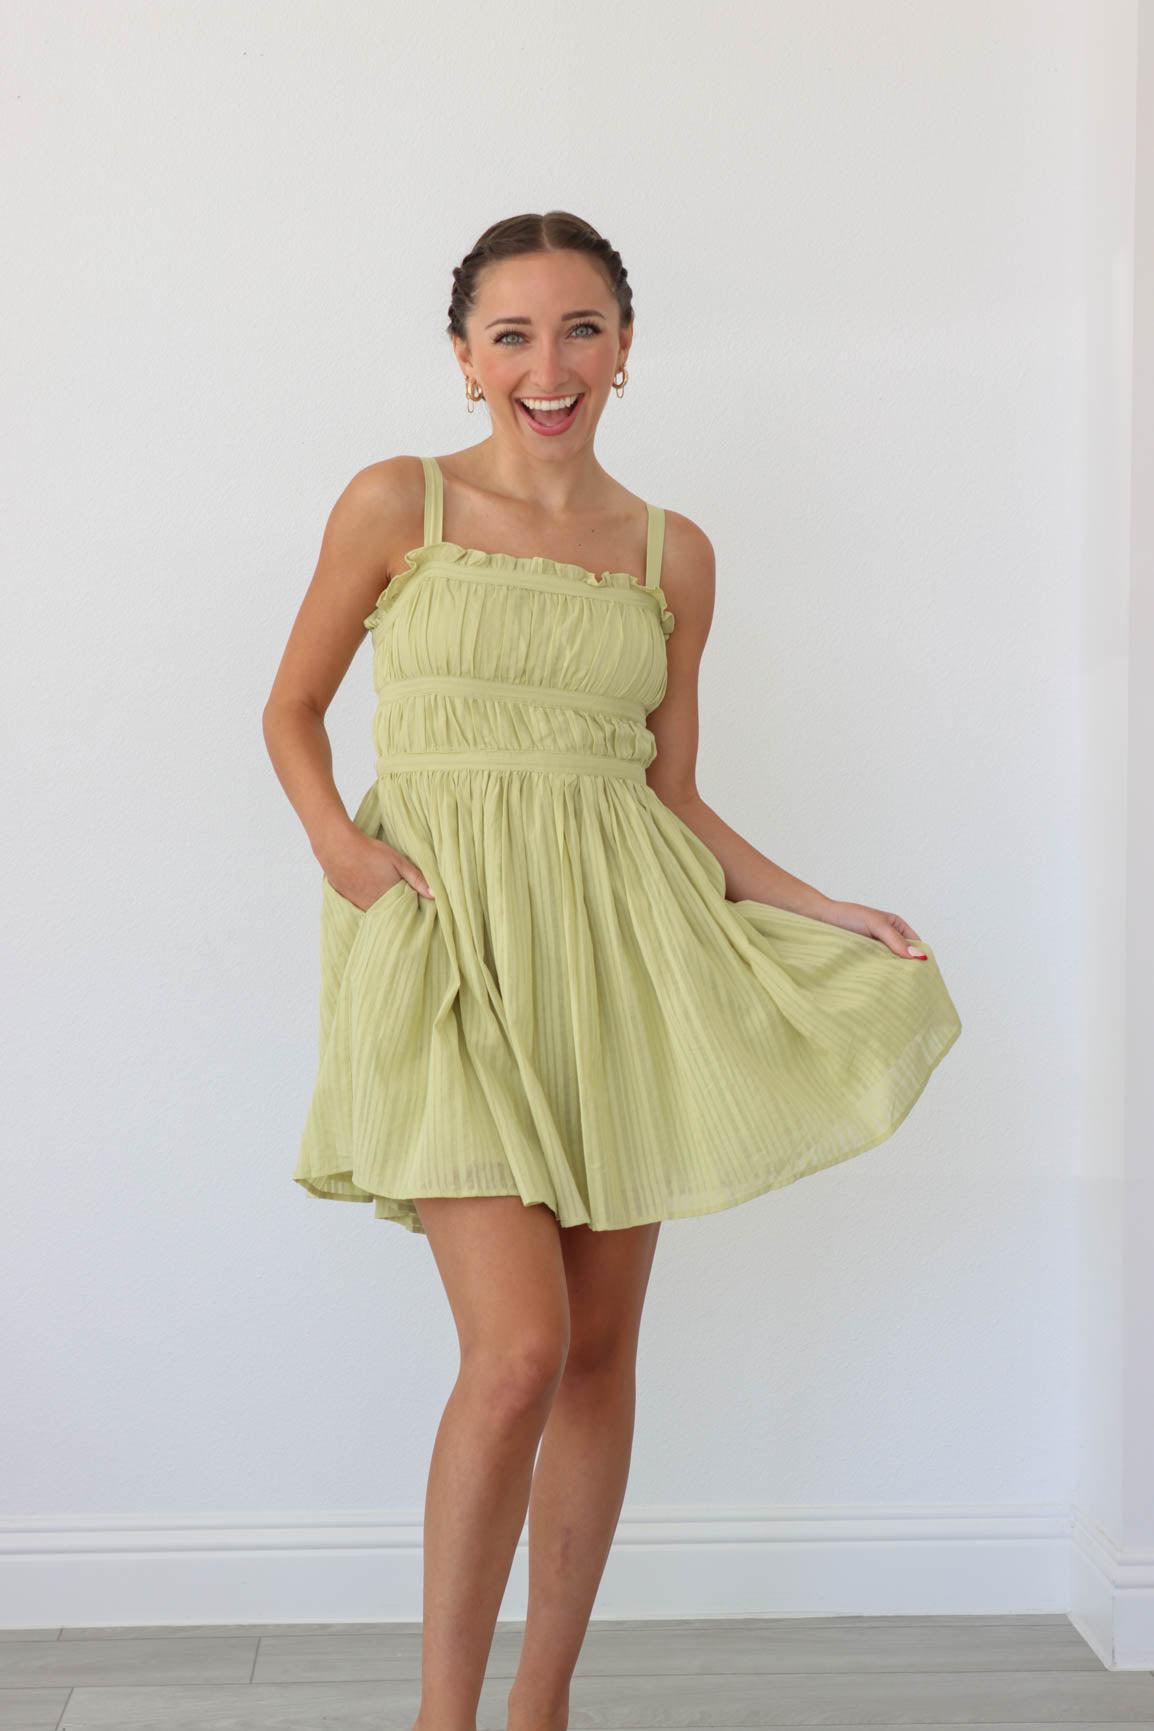 girl wearing light green short dress